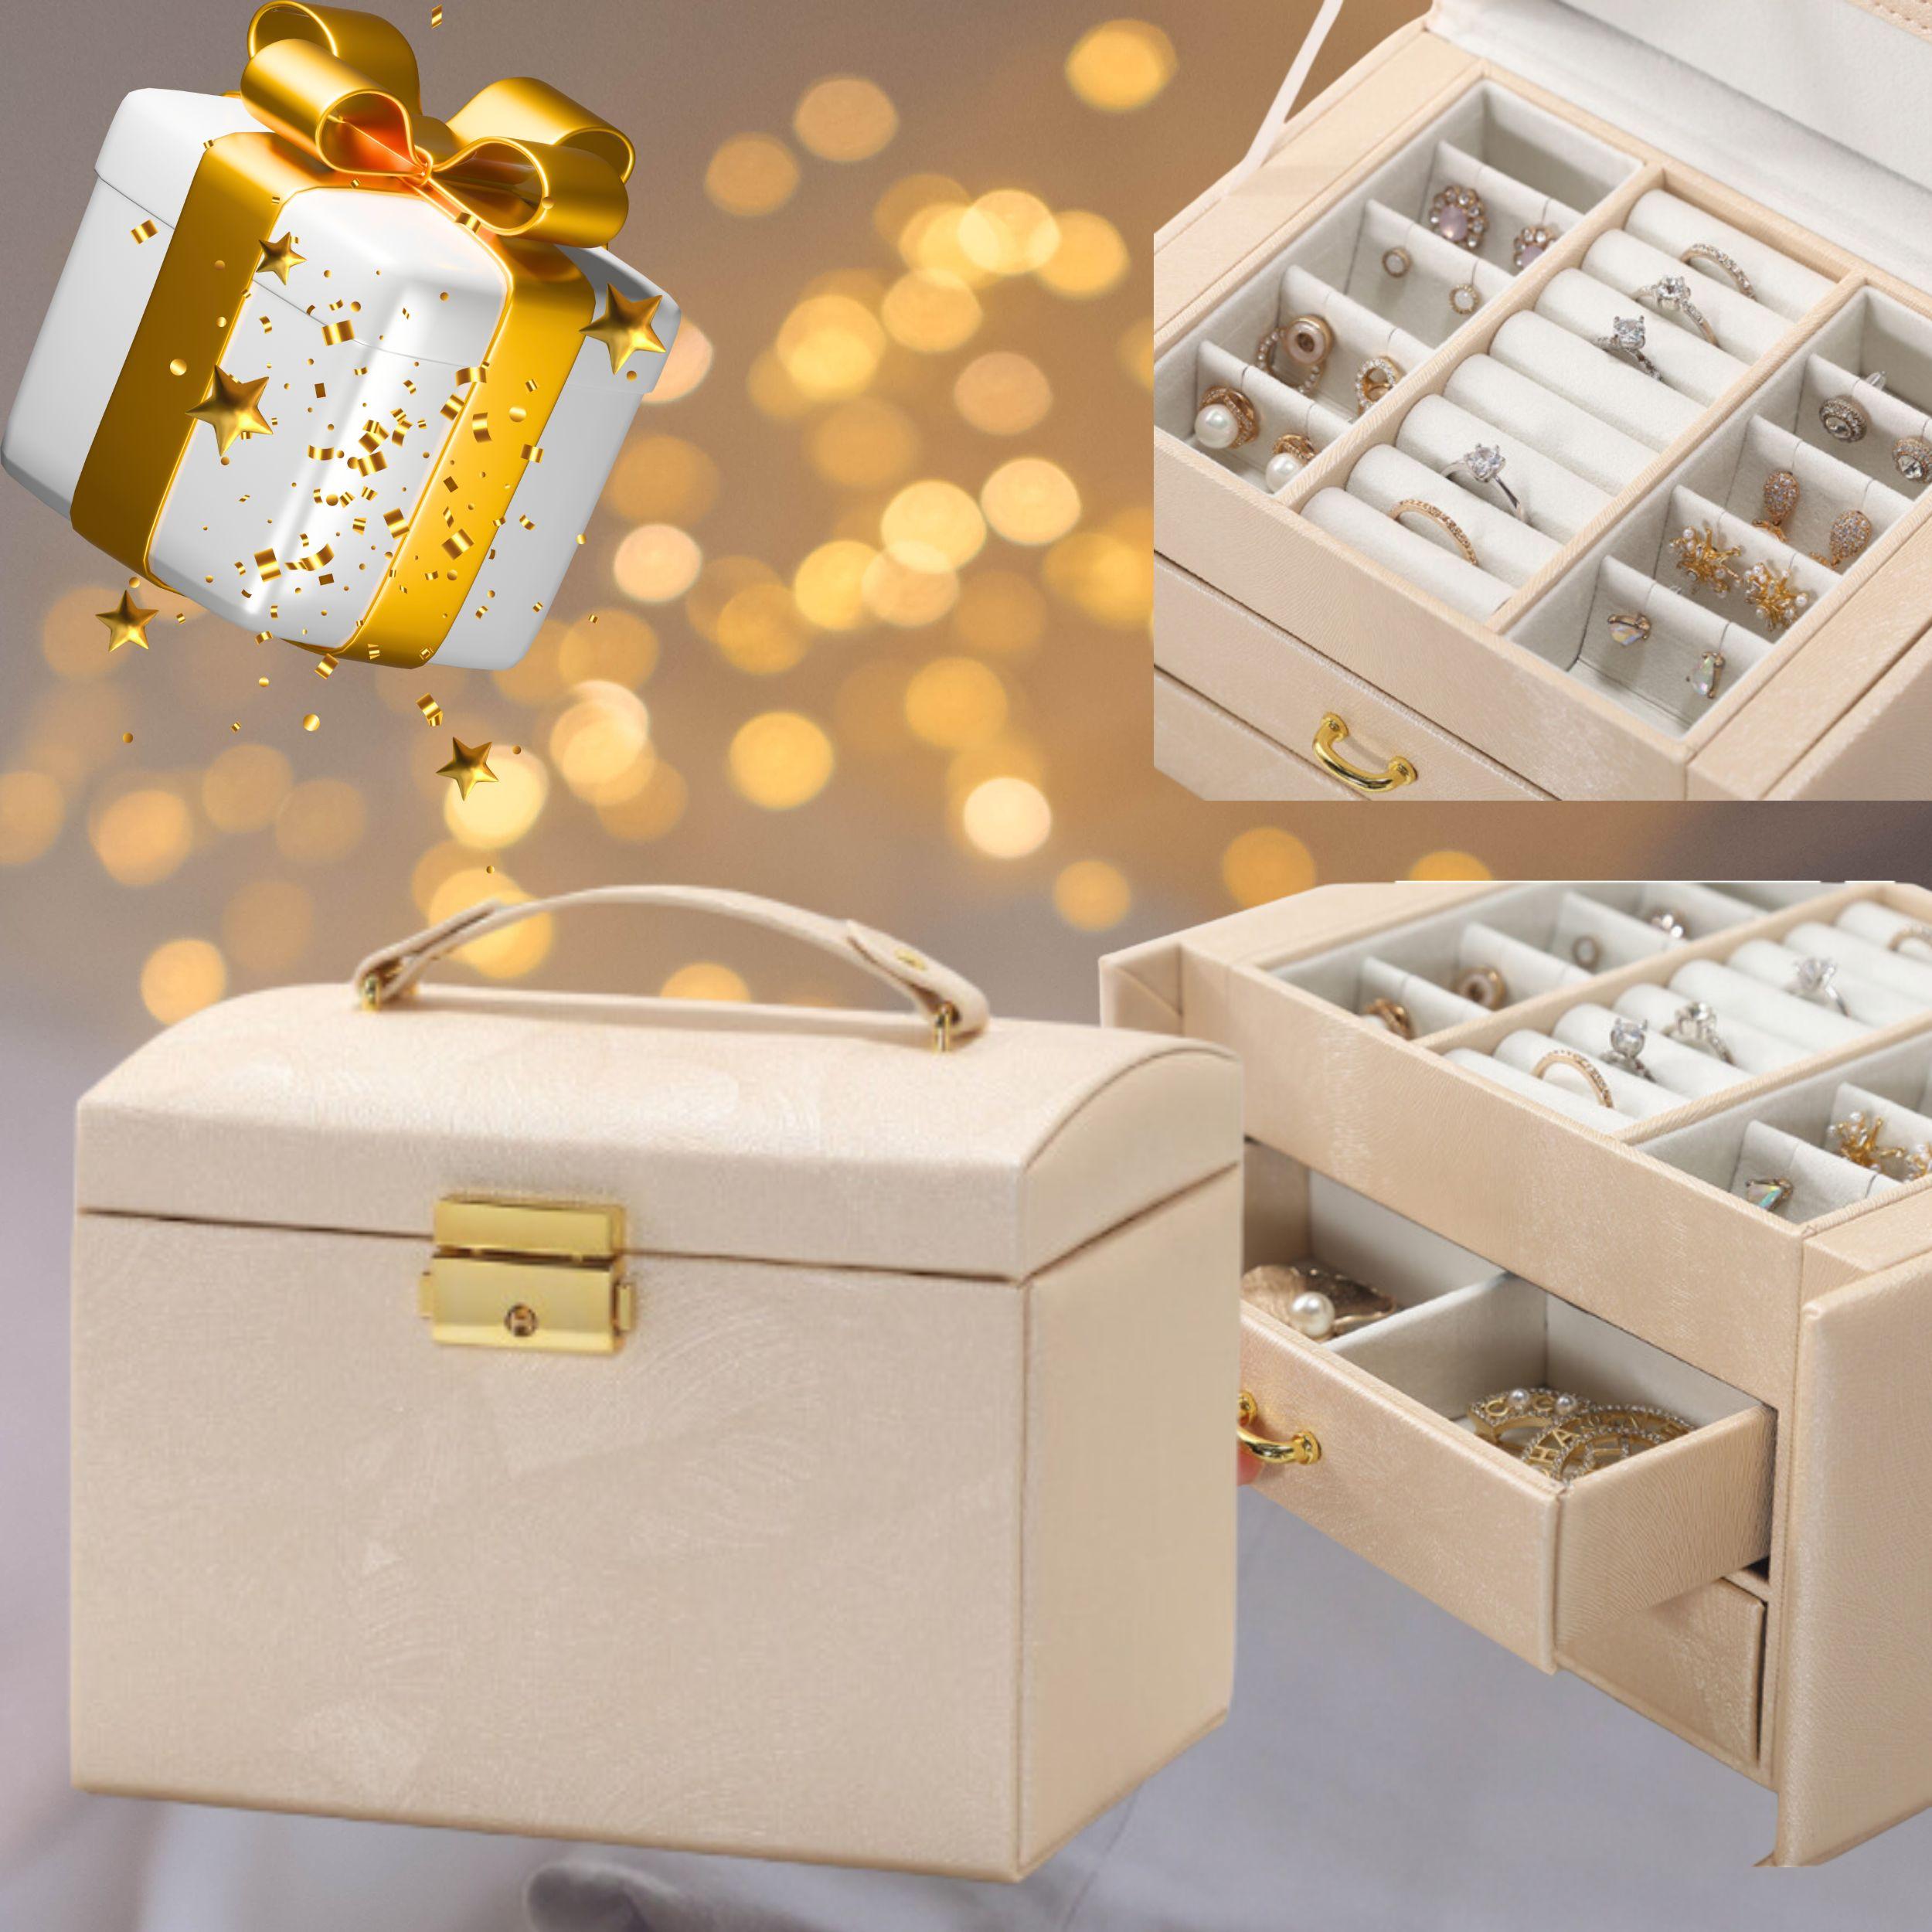 A multi-level casket, a jewelery box - gold